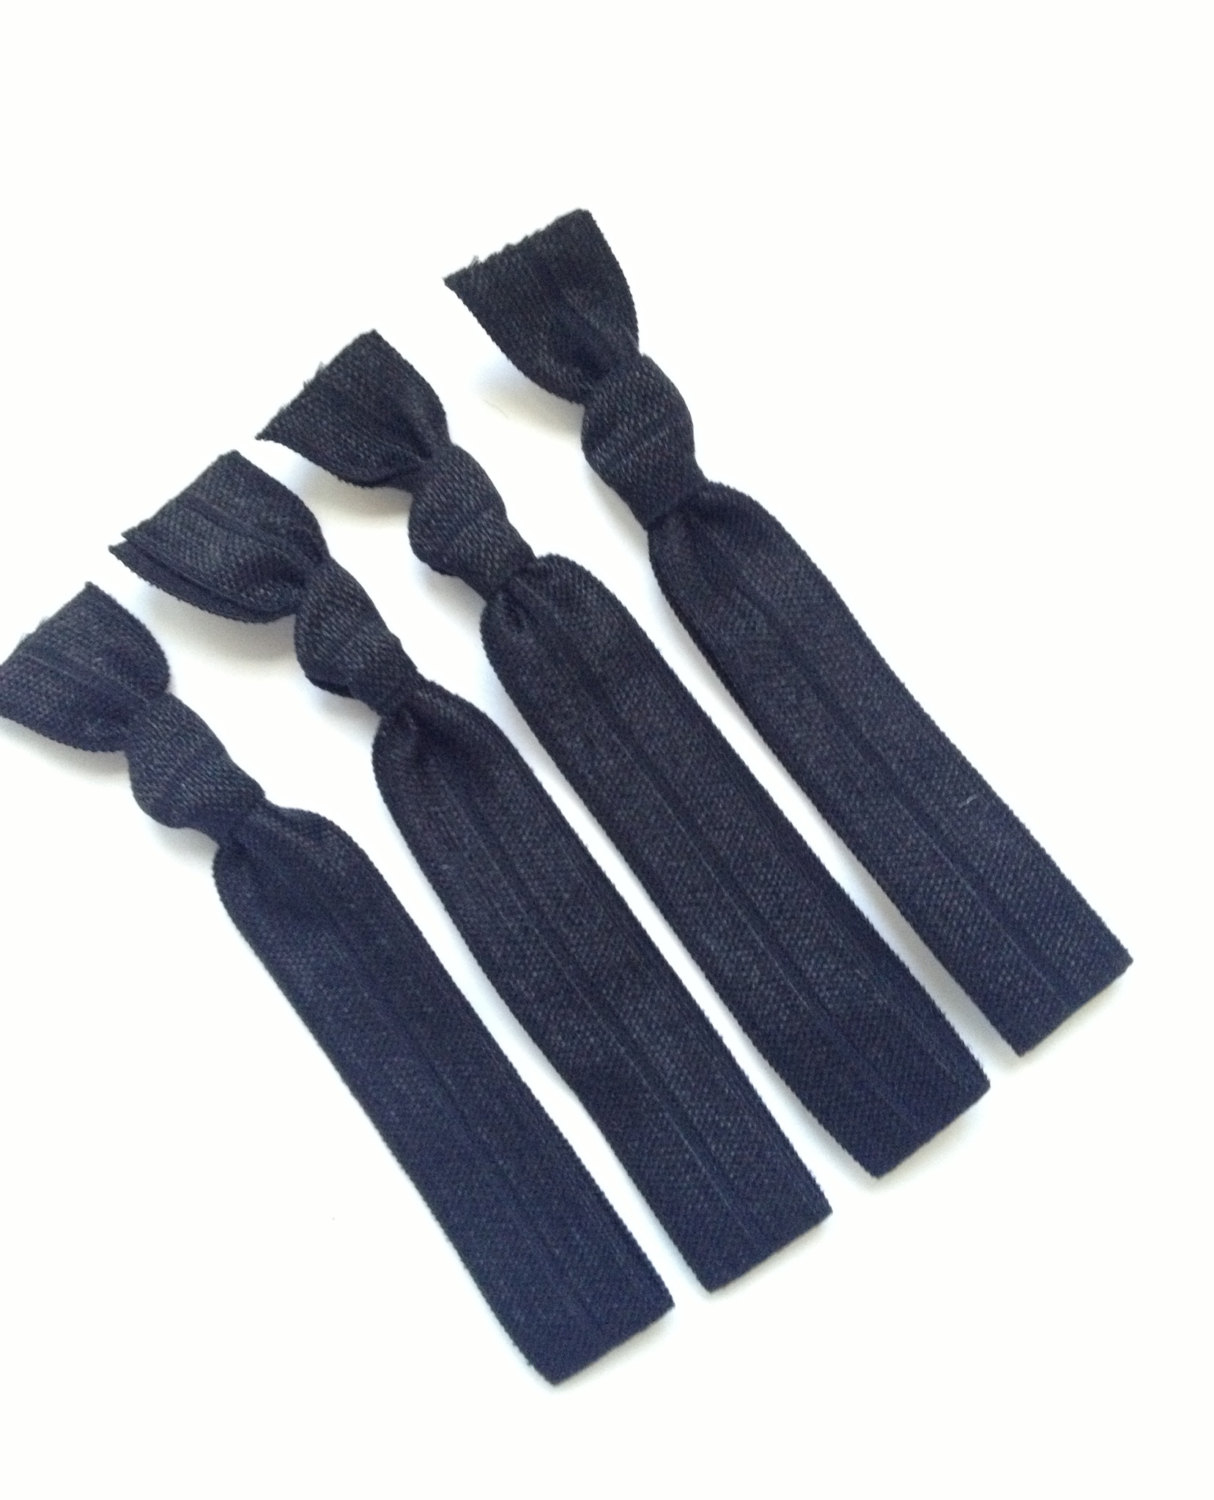 Elastic Hair Ties - Solid Black Collection - Ponytail Holder - by Elastic Hair Bandz